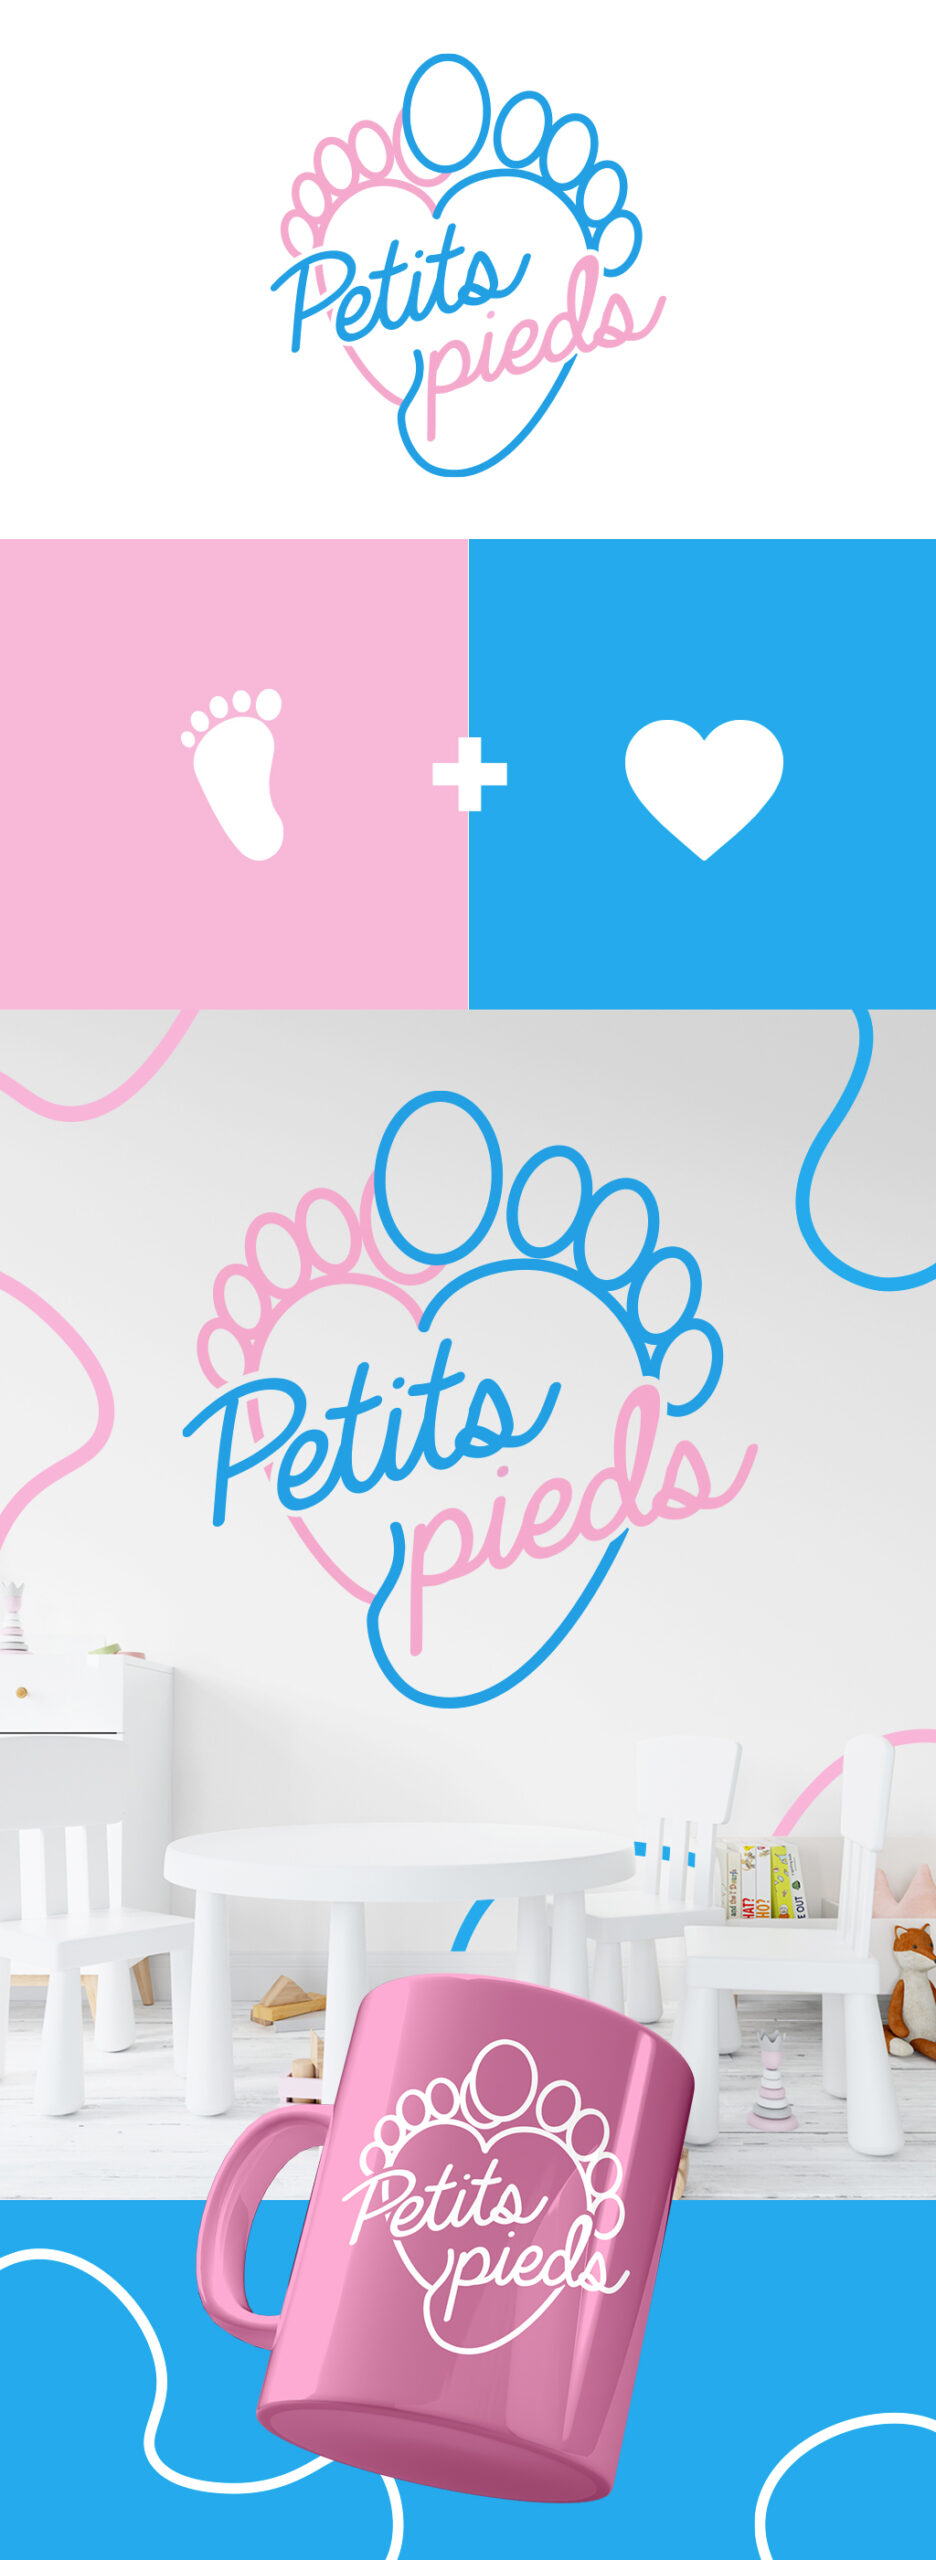 Pres_Petits_pieds